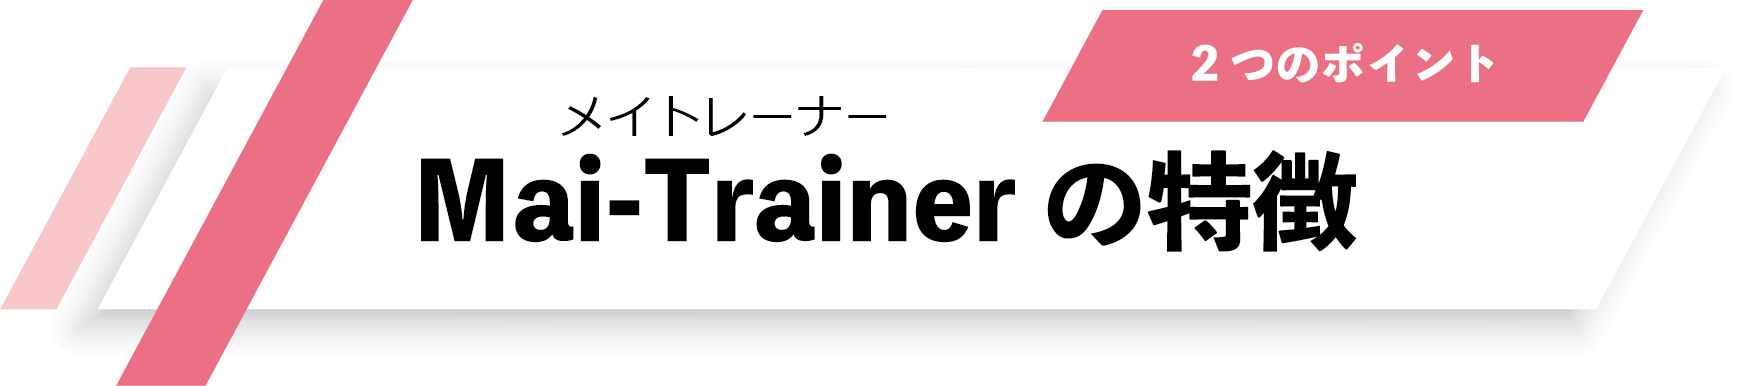 Mai-trainer by KOTOBUKI Medical株式会社